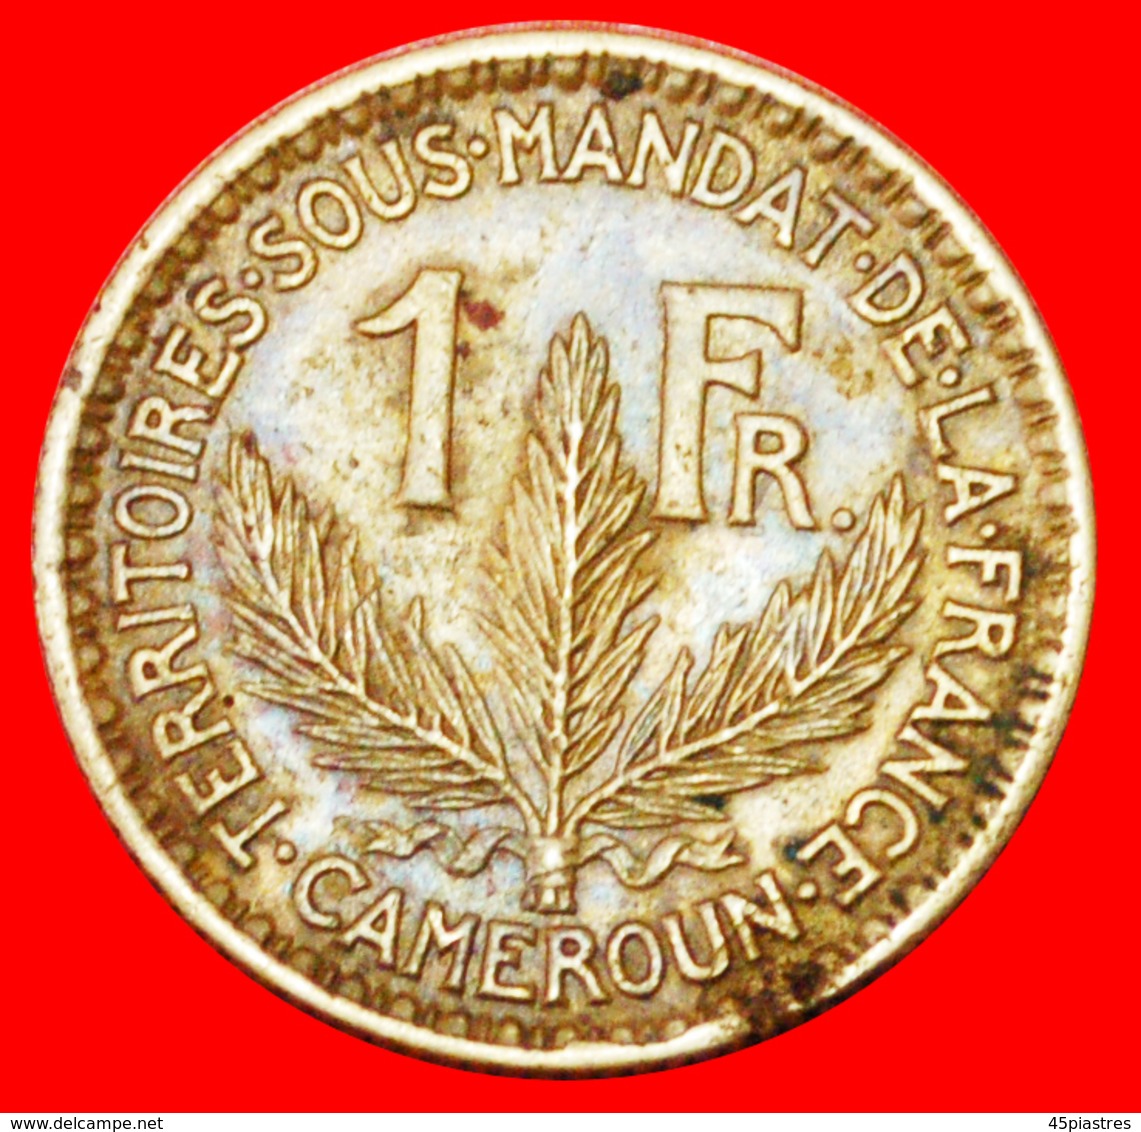 # FRANCE (1924-1926): CAMEROON ★ 1 FRANC 1926! LOW START ★ NO RESERVE! - Cameroun